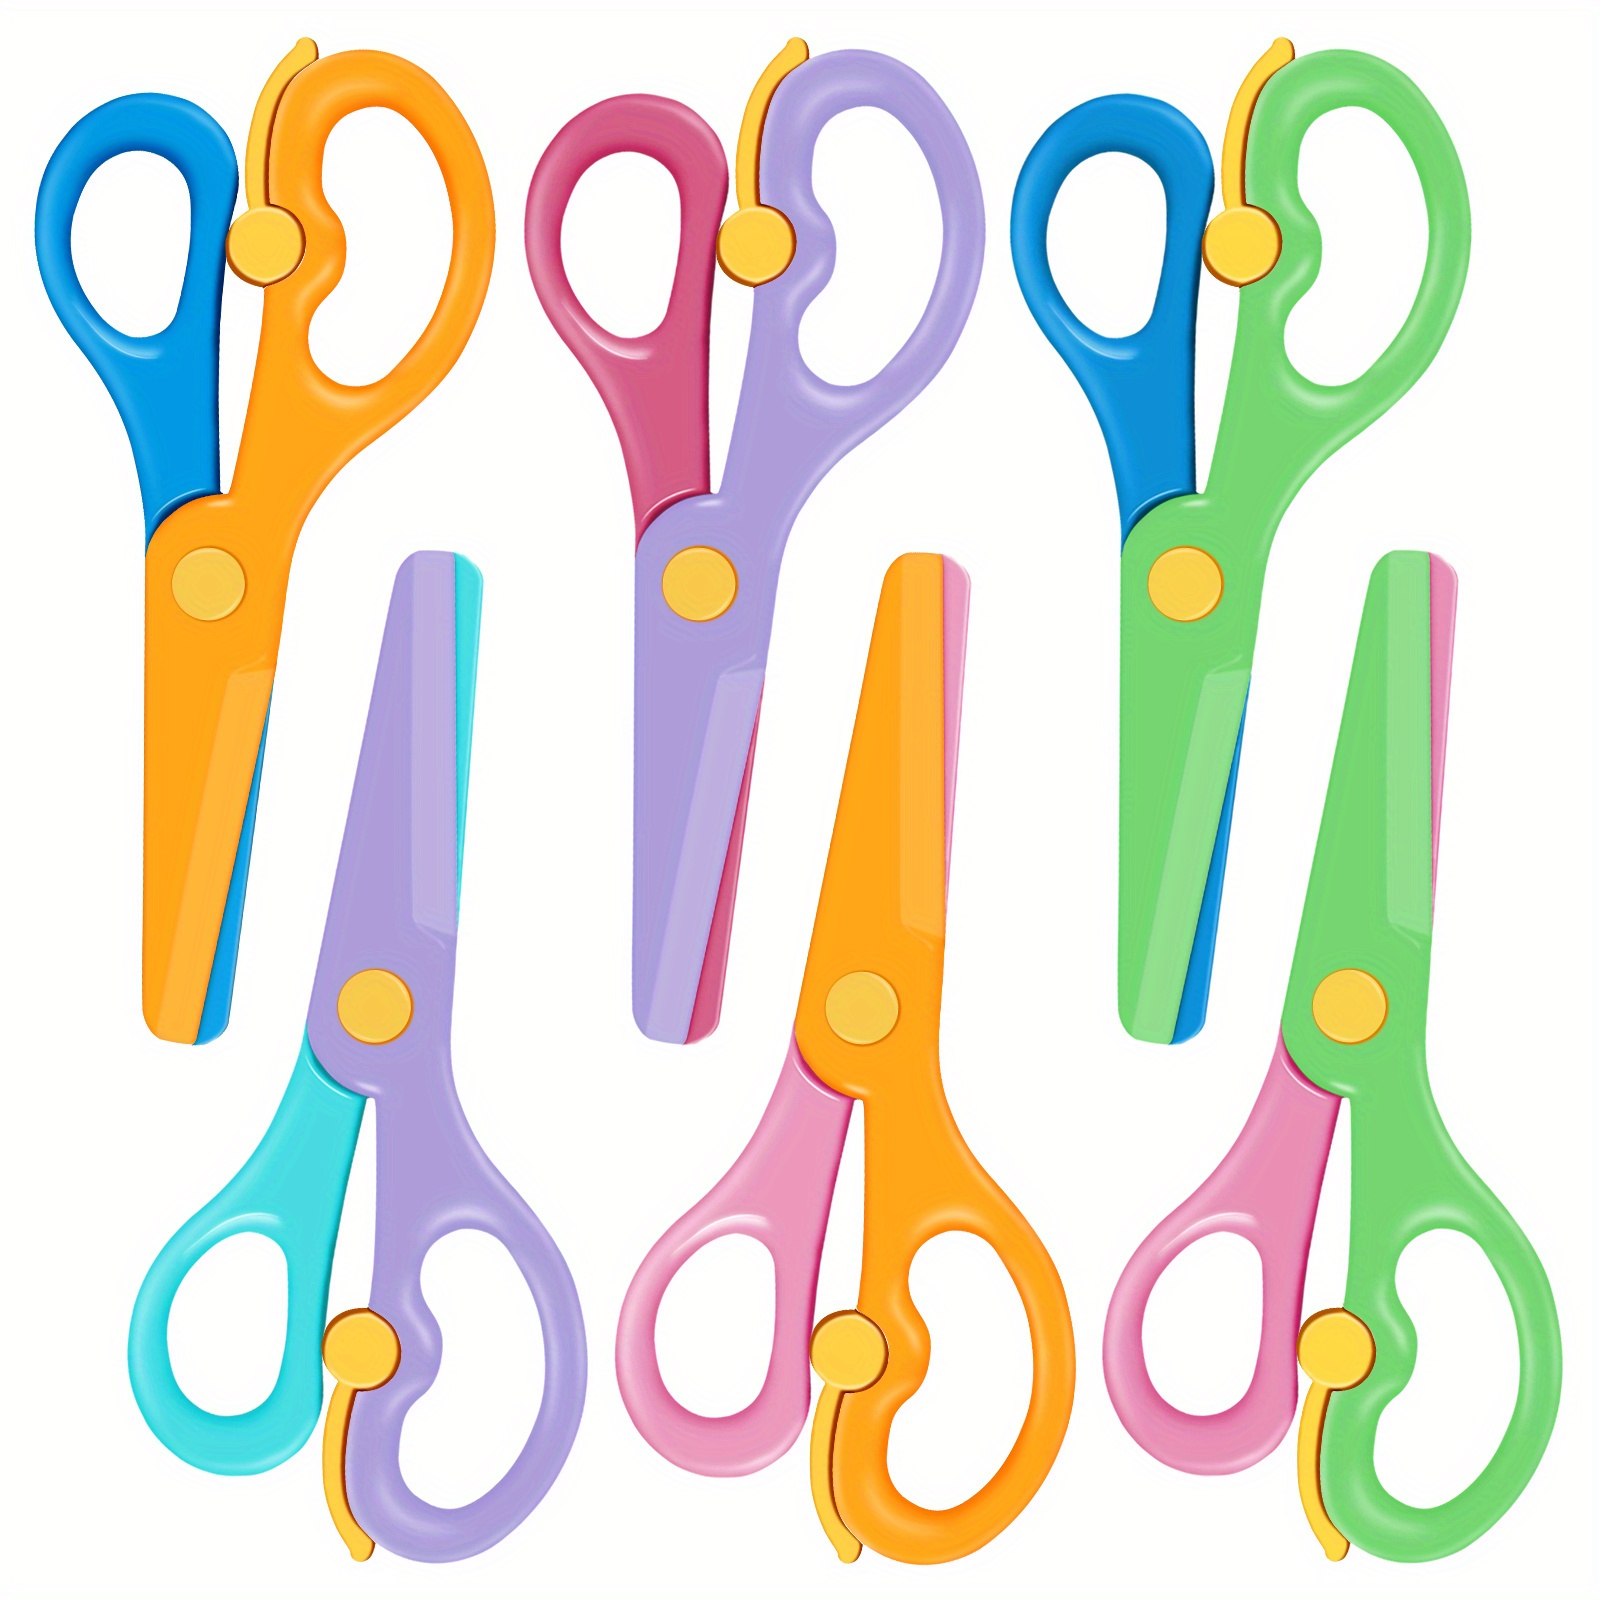 1pc Random Color Art Scissors